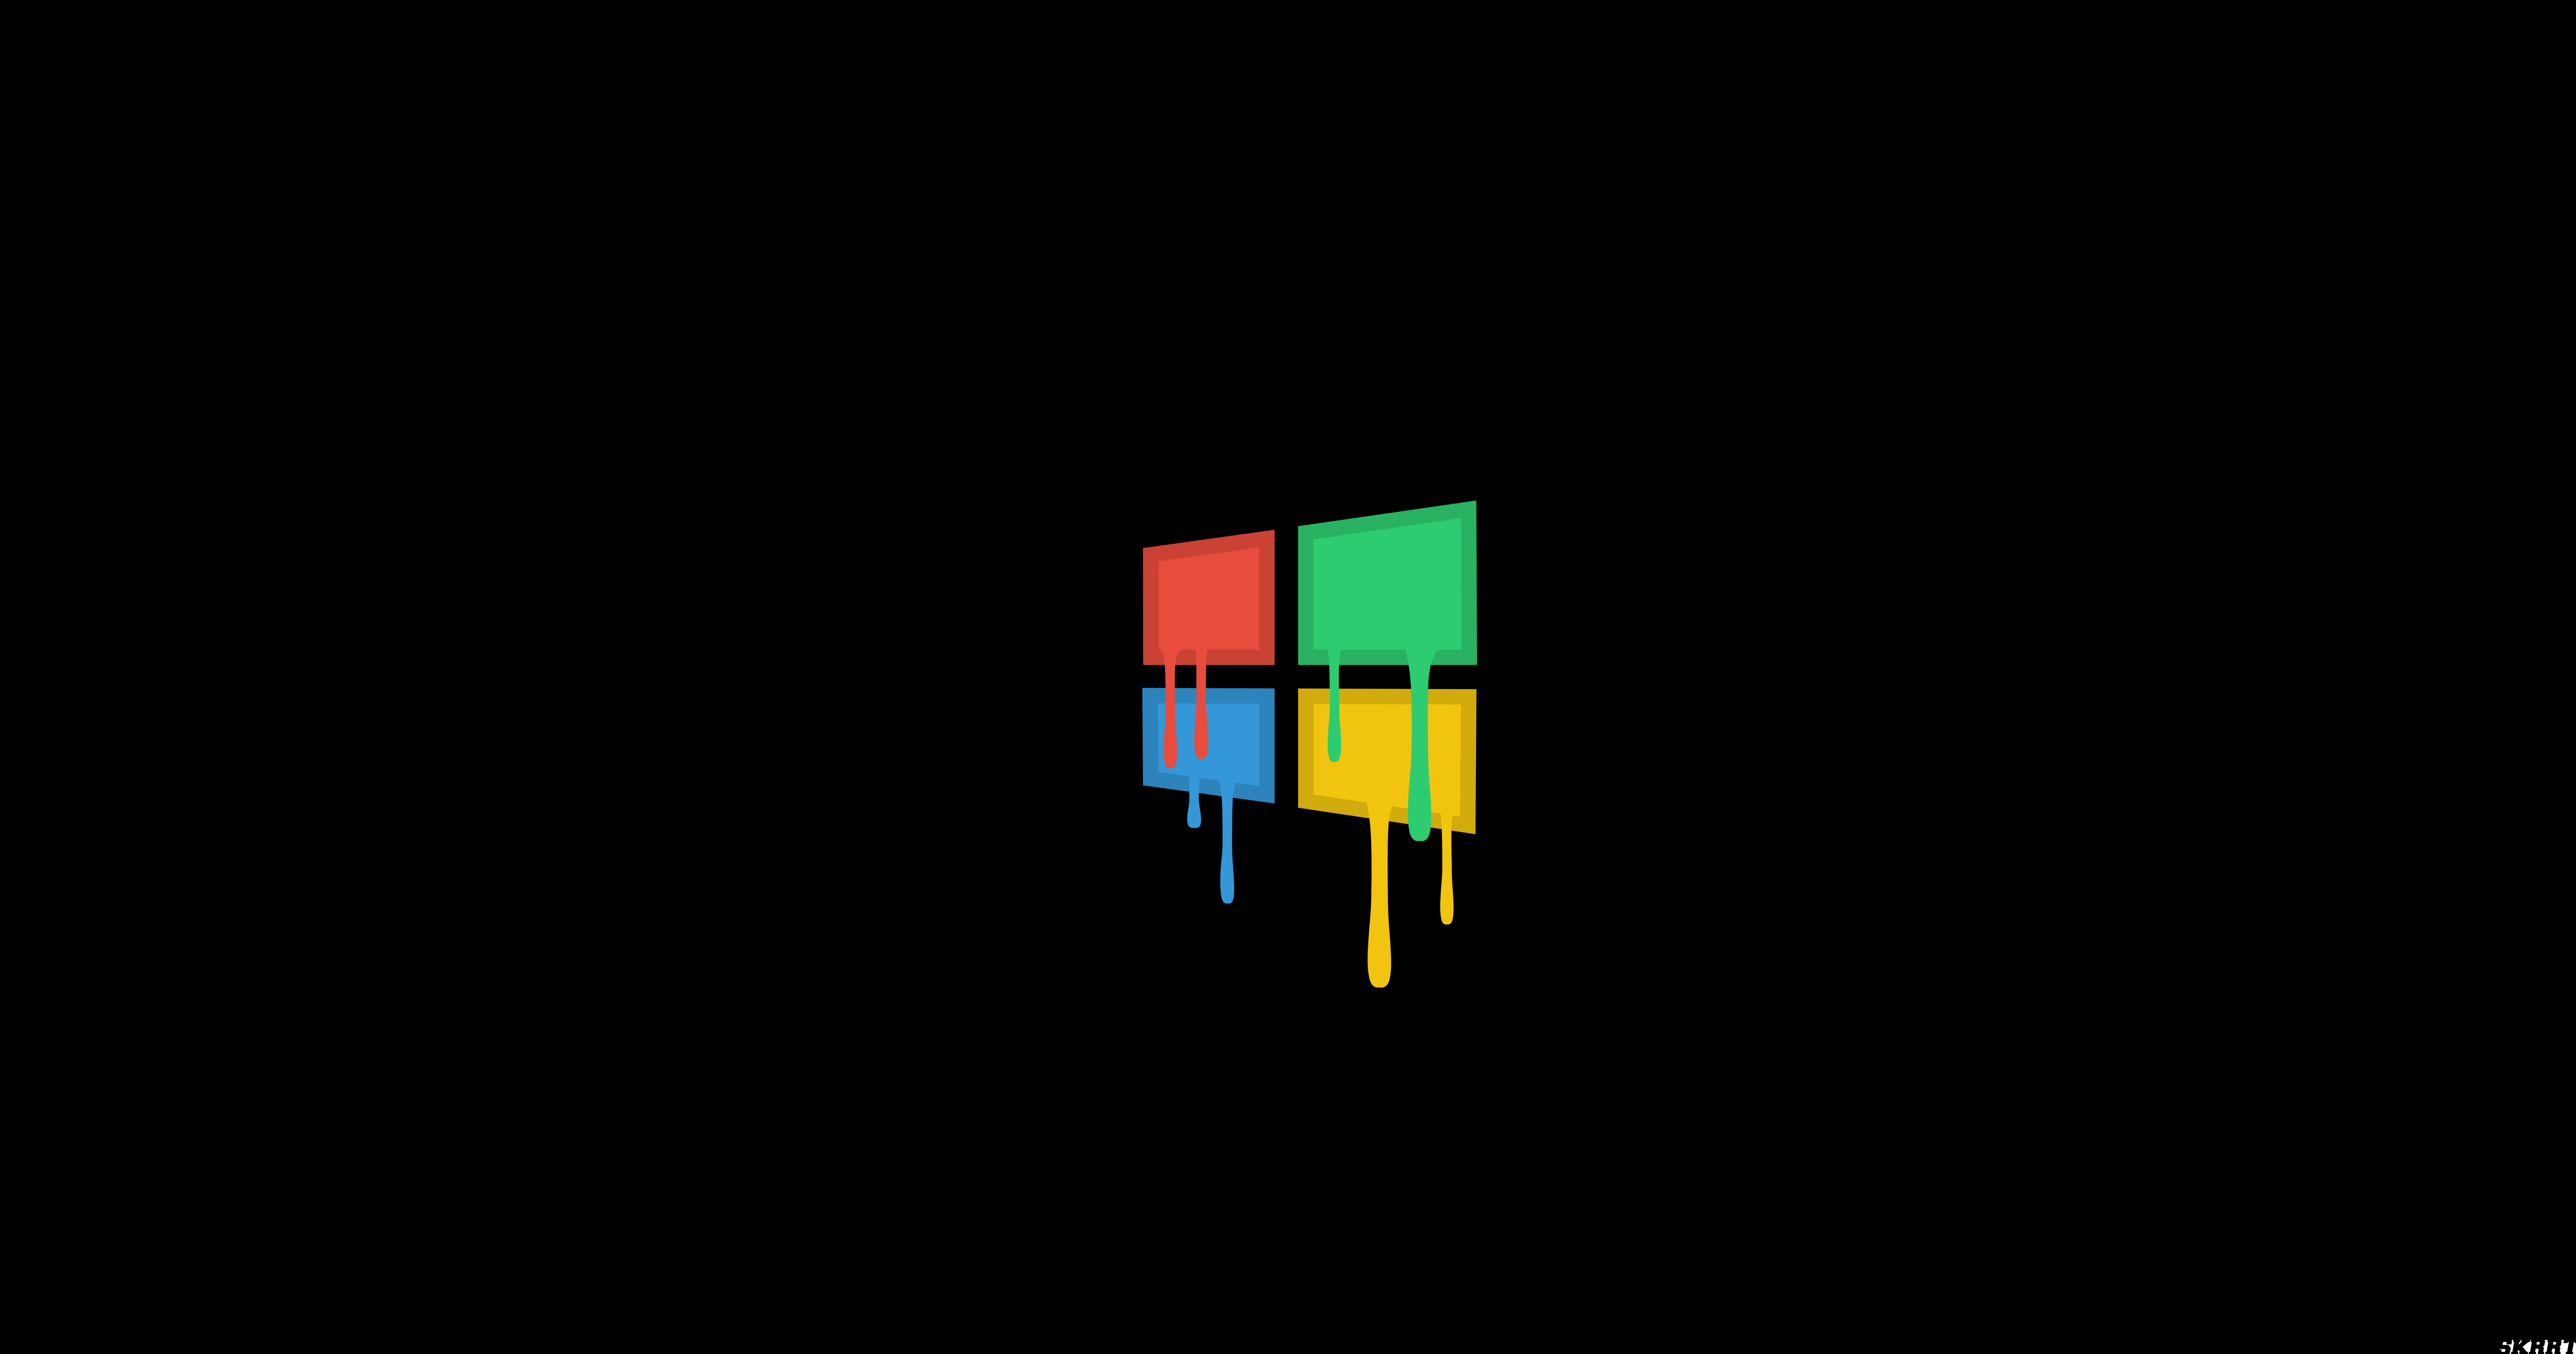 Windows Logo Simple Background Black Background Minimalism Digital Art Microsoft Windows Dripping Pa 7842x4123